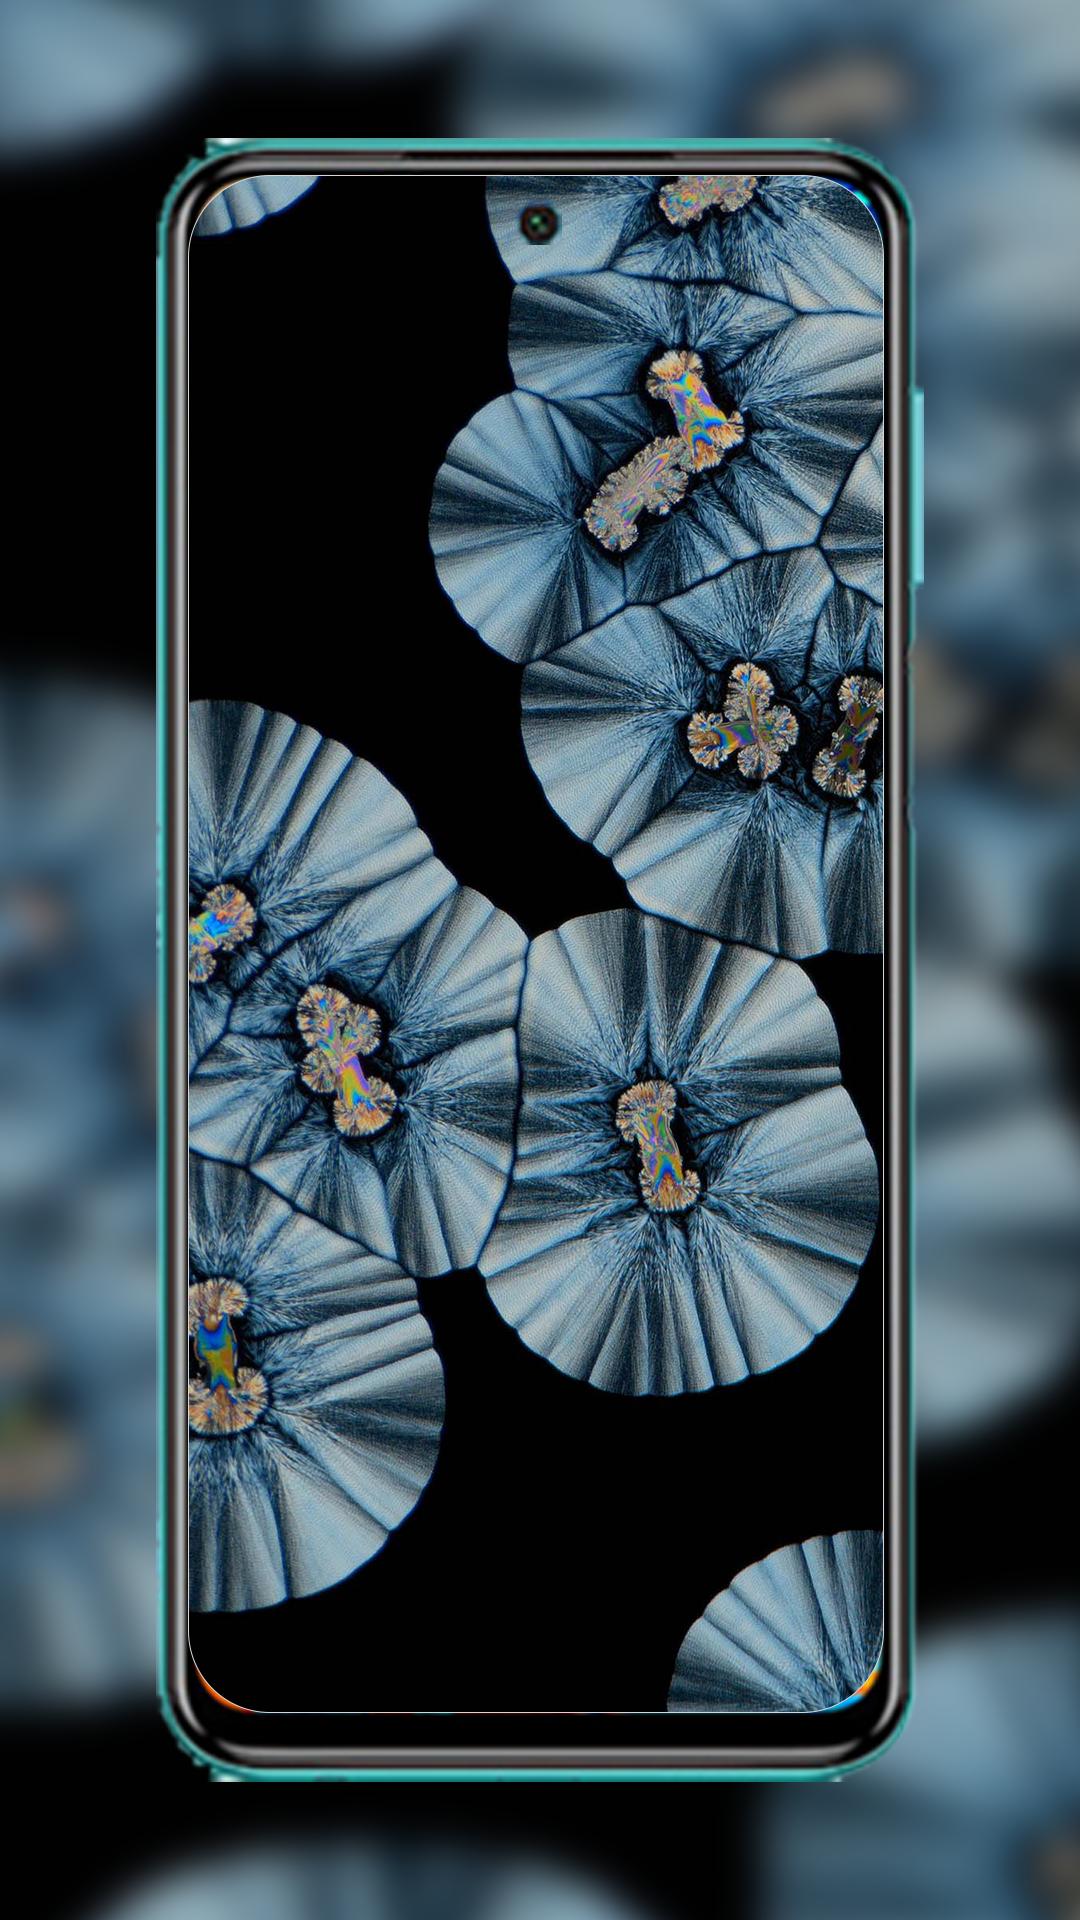 Tải xuống APK MIUI 13 Wallpaper cho Android